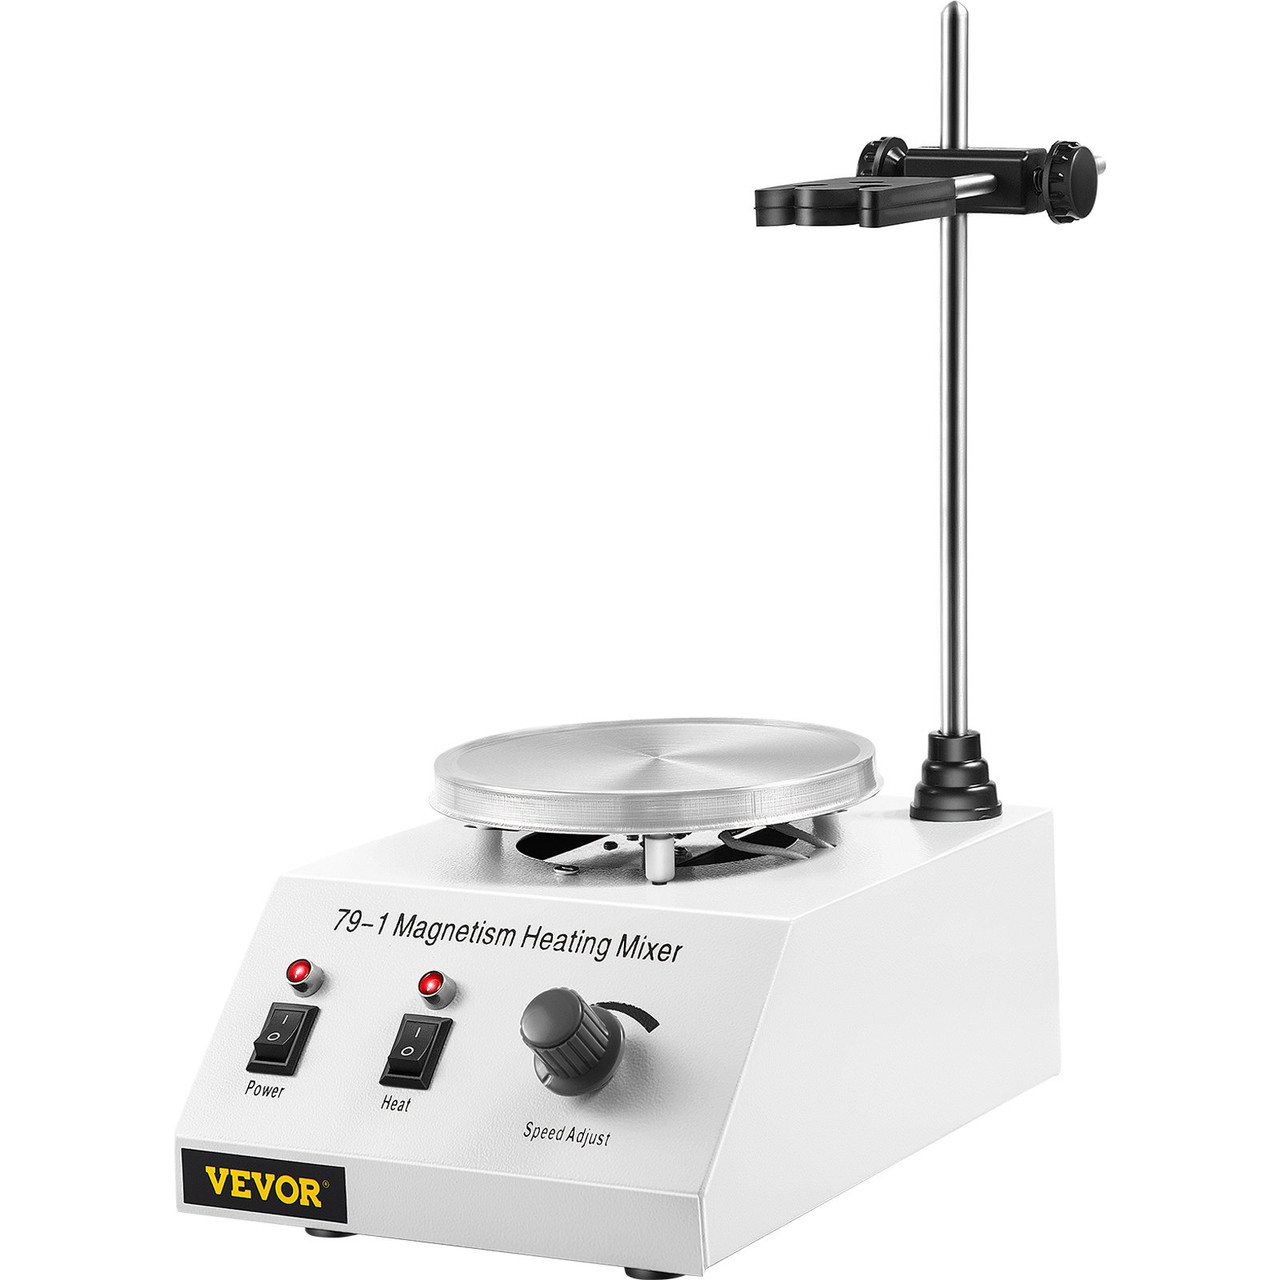 VEVOR Magnetic Stirrer 250W 158?/70? Heating Hot Plate with Magnetic Stirrer 0-1600 RPM Adjustable 1000ML Lab Magnetic Stirrer Mixer with Stand Support, Stirring Bar